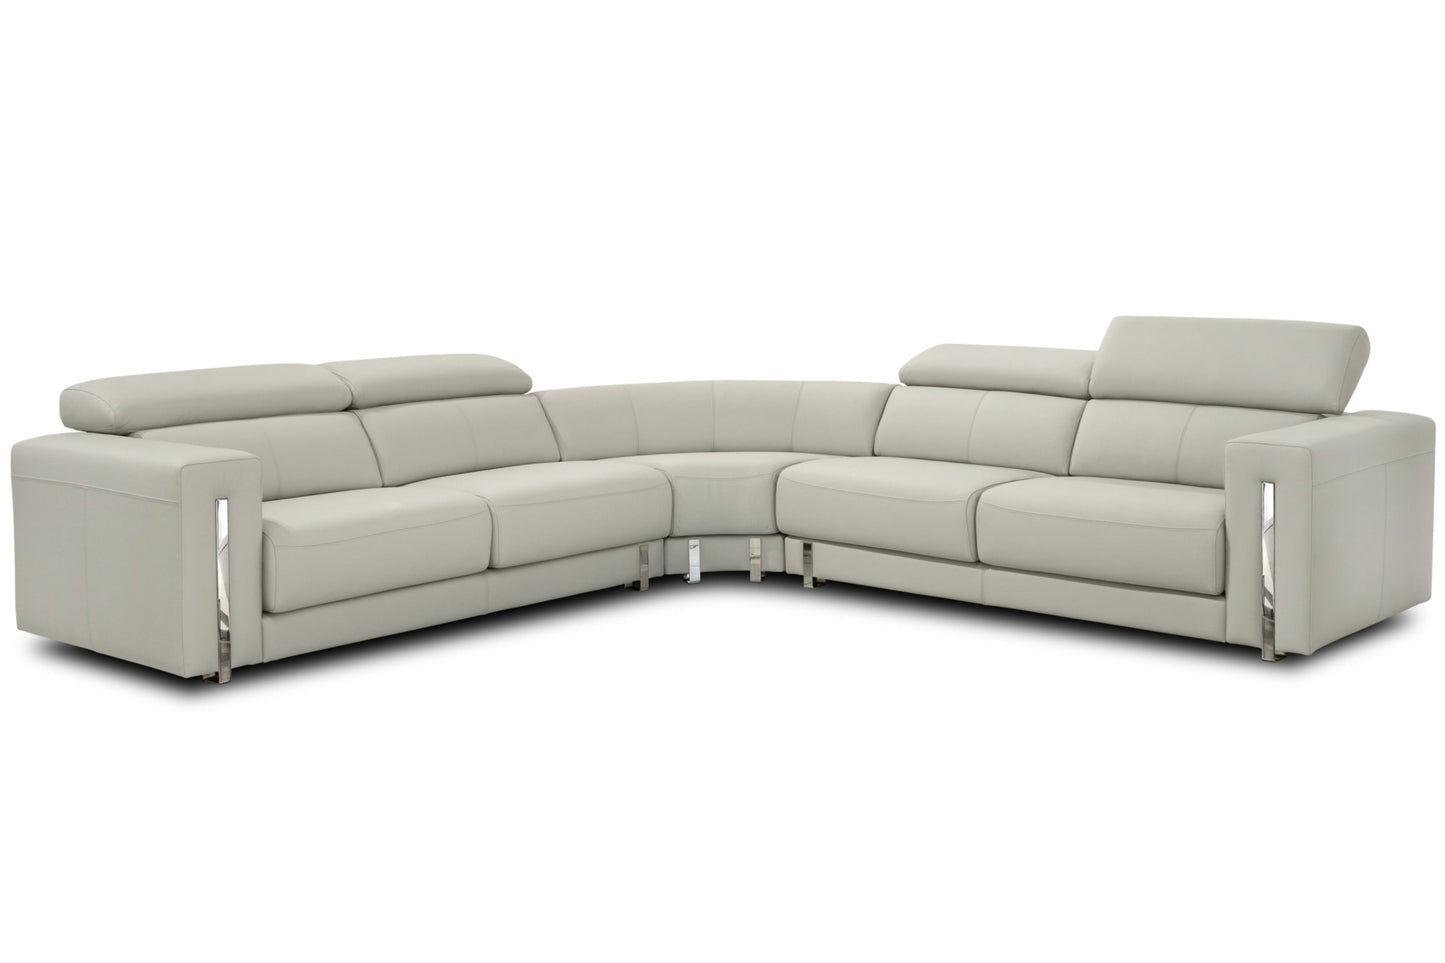 Walter 3+3 Corner Sofa With Discreet Docking Station (SIZE 3.2M X 3.2M) Colour: Light Grey